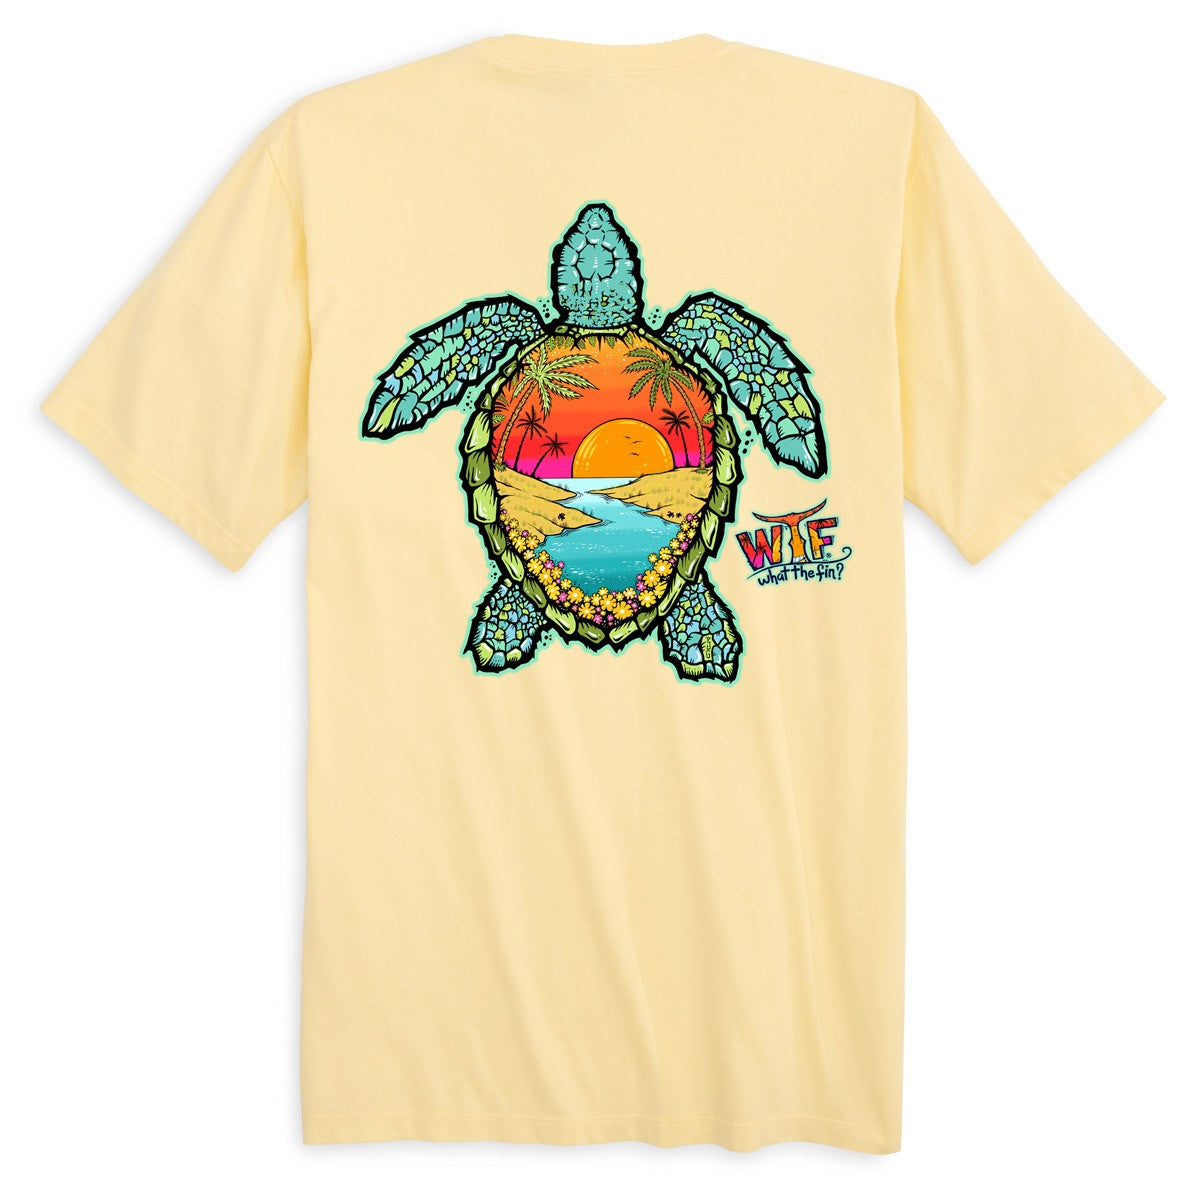 Turtle OI S/S Cotton Tee (ID:C24)